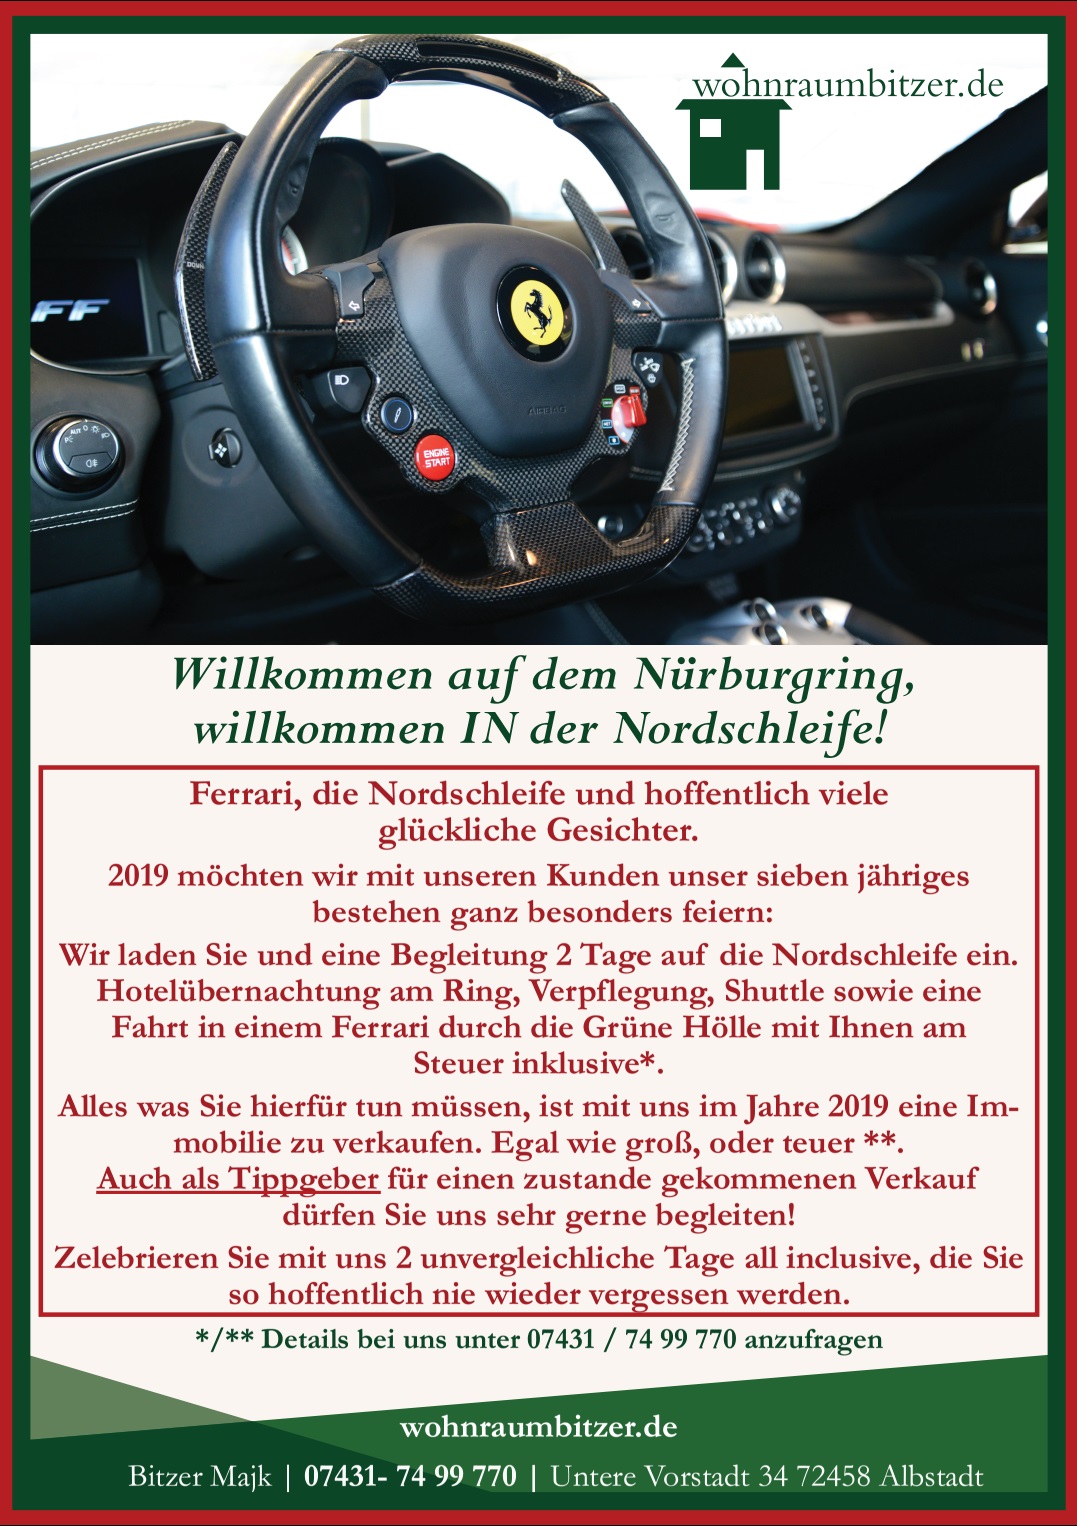 Teilnahmebedingungen, Ferrari Nordschleife Nürburgring Veranstaltung wohnraumbitzer.de 2019 Ferrari Albstadt